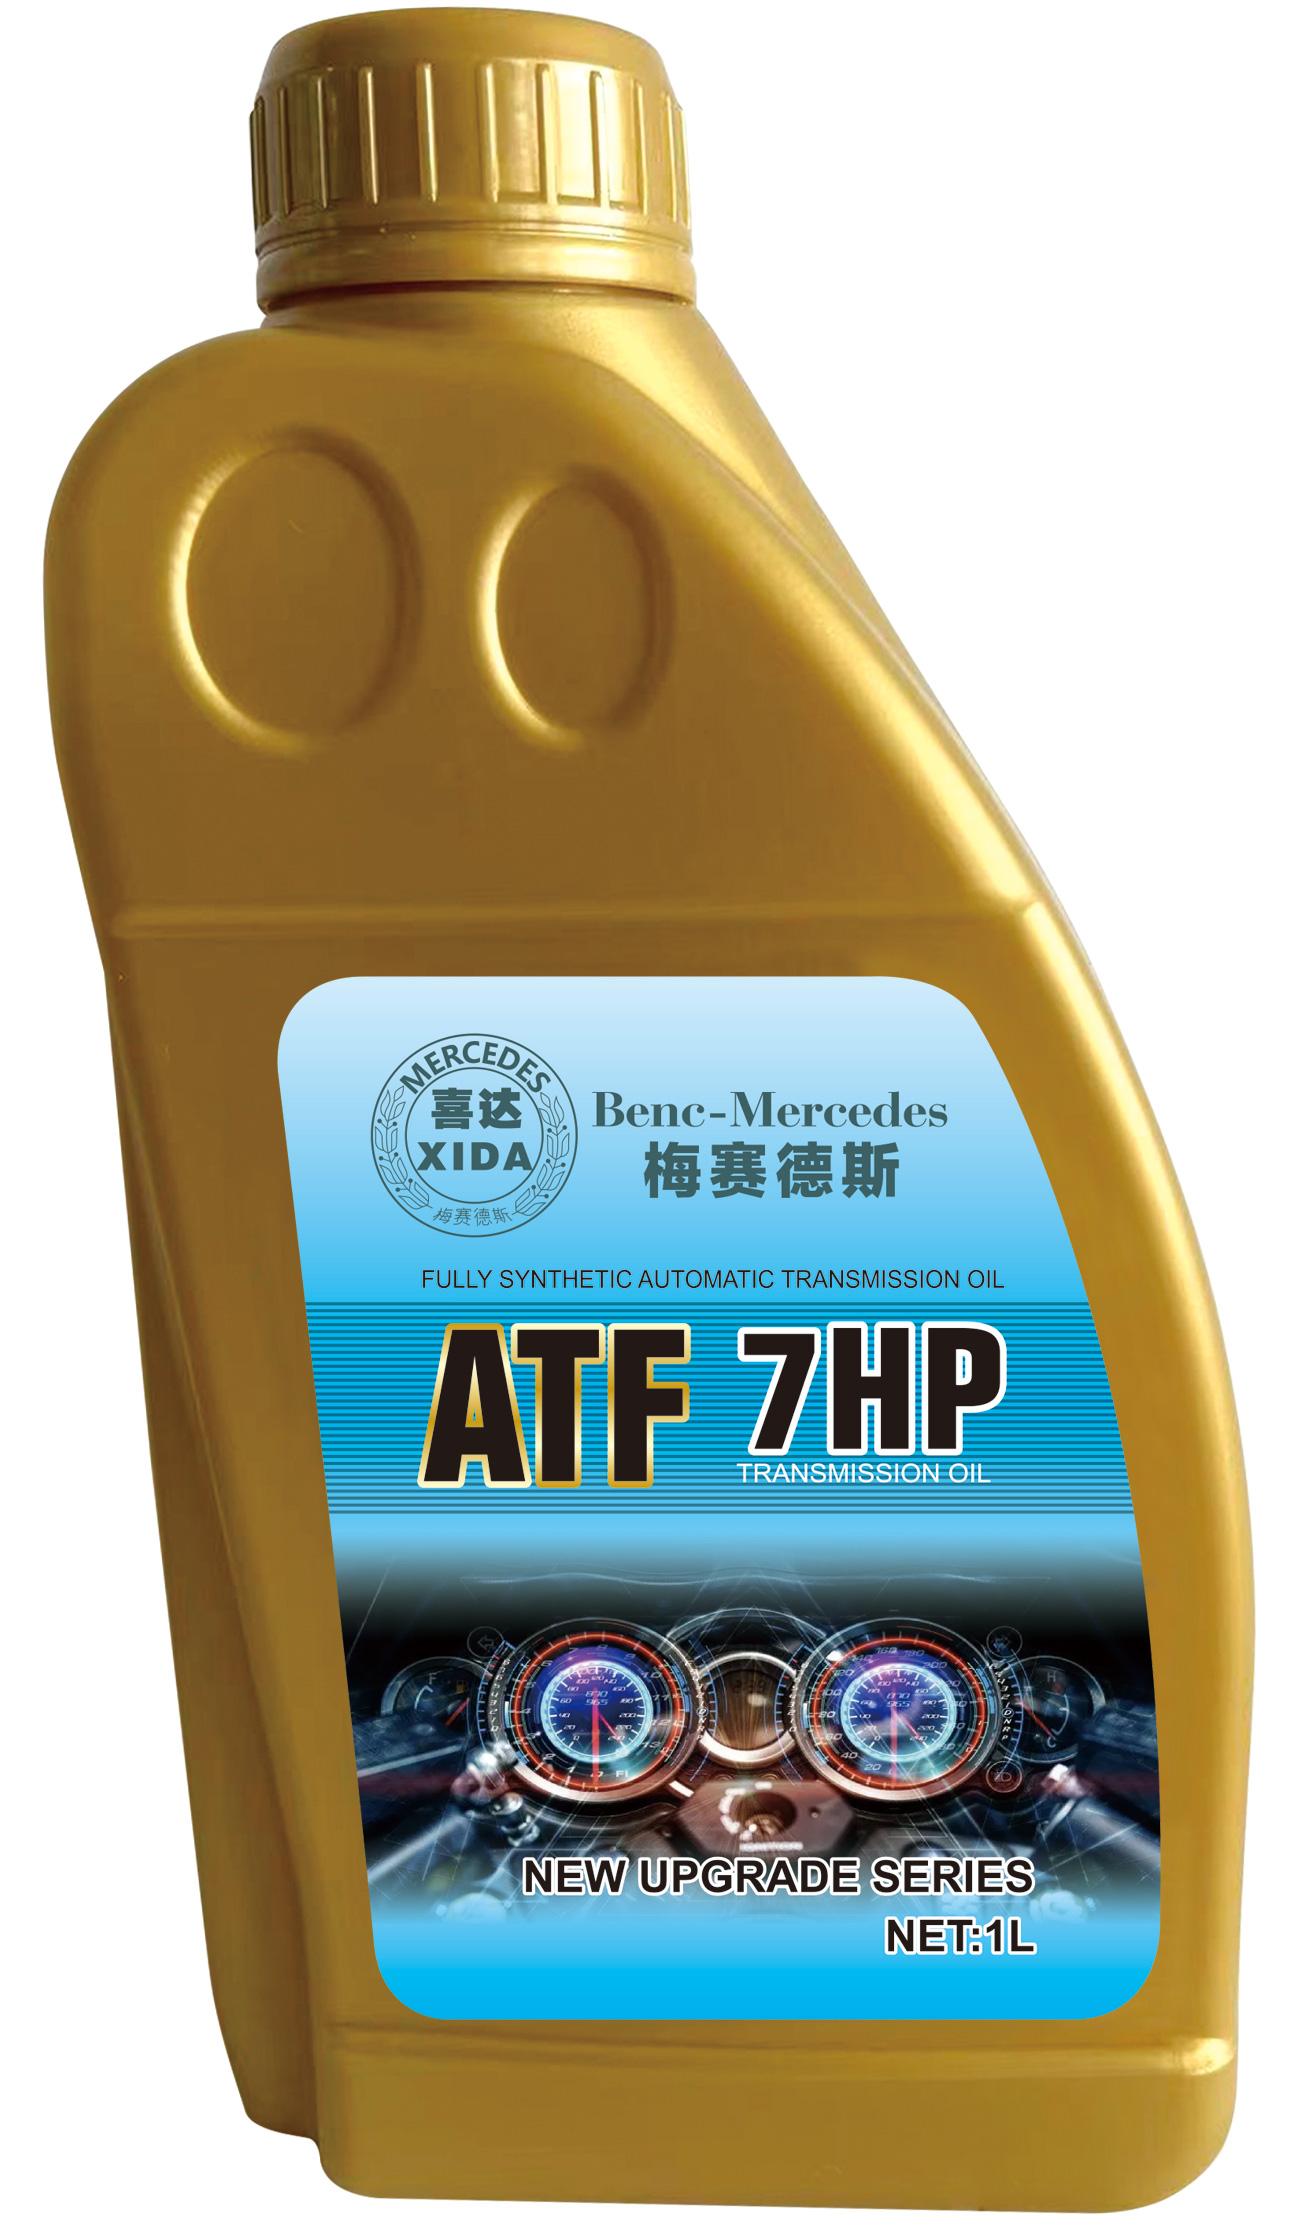 ATF-7HP